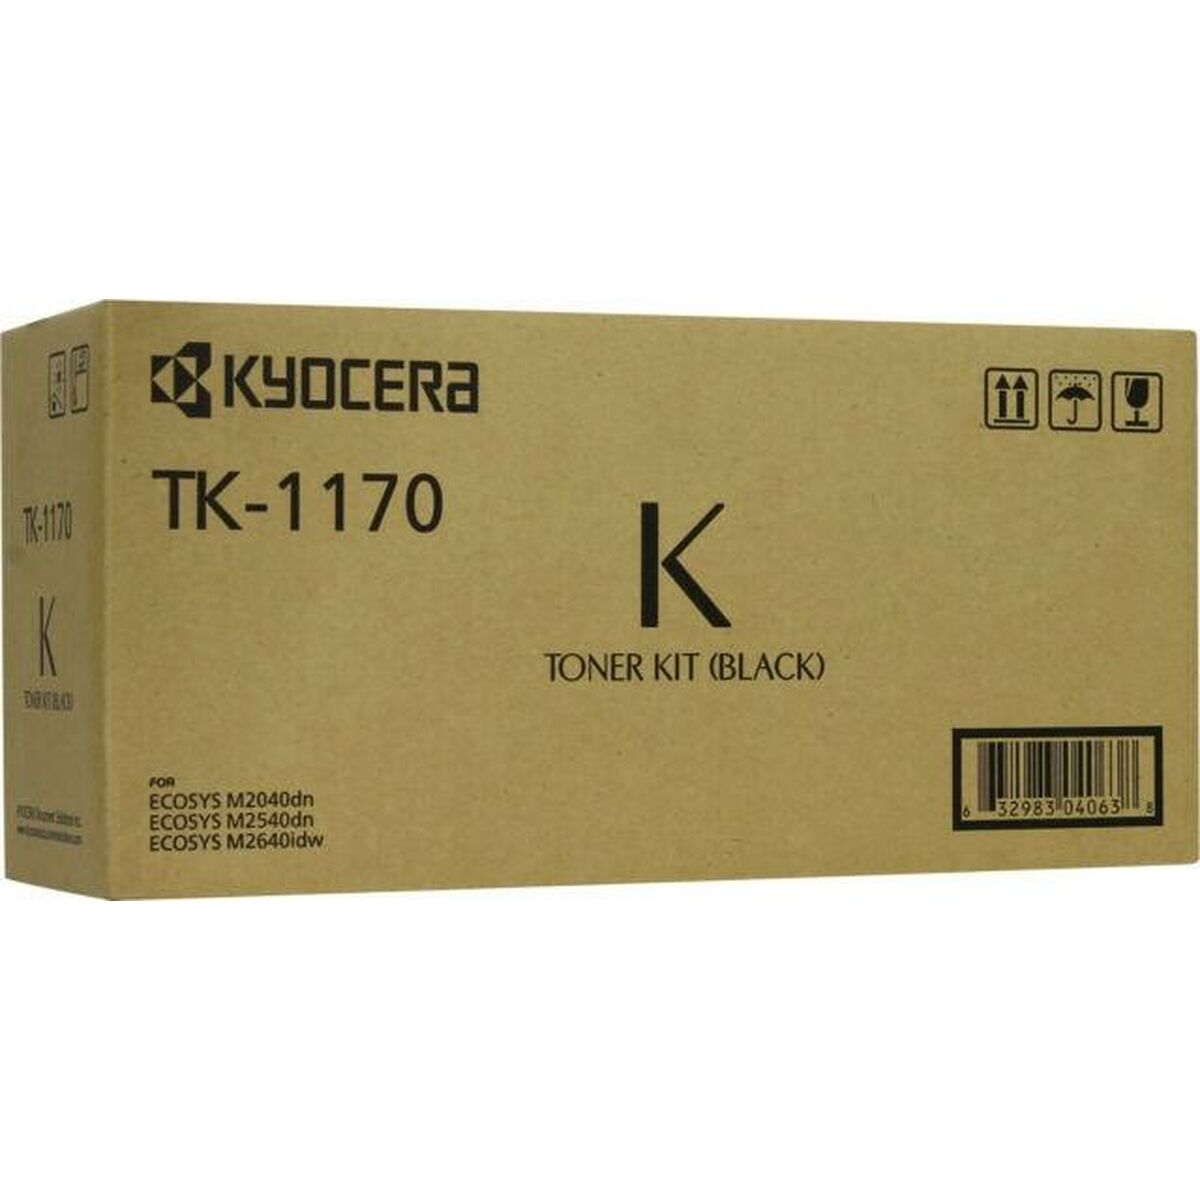 Toner Kyocera TK-1170 Black, Kyocera, Computing, Printers and accessories, toner-kyocera-tk-1170-black, Brand_Kyocera, category-reference-2609, category-reference-2642, category-reference-2876, category-reference-t-19685, category-reference-t-19911, category-reference-t-21377, category-reference-t-25688, Condition_NEW, office, Price_100 - 200, RiotNook